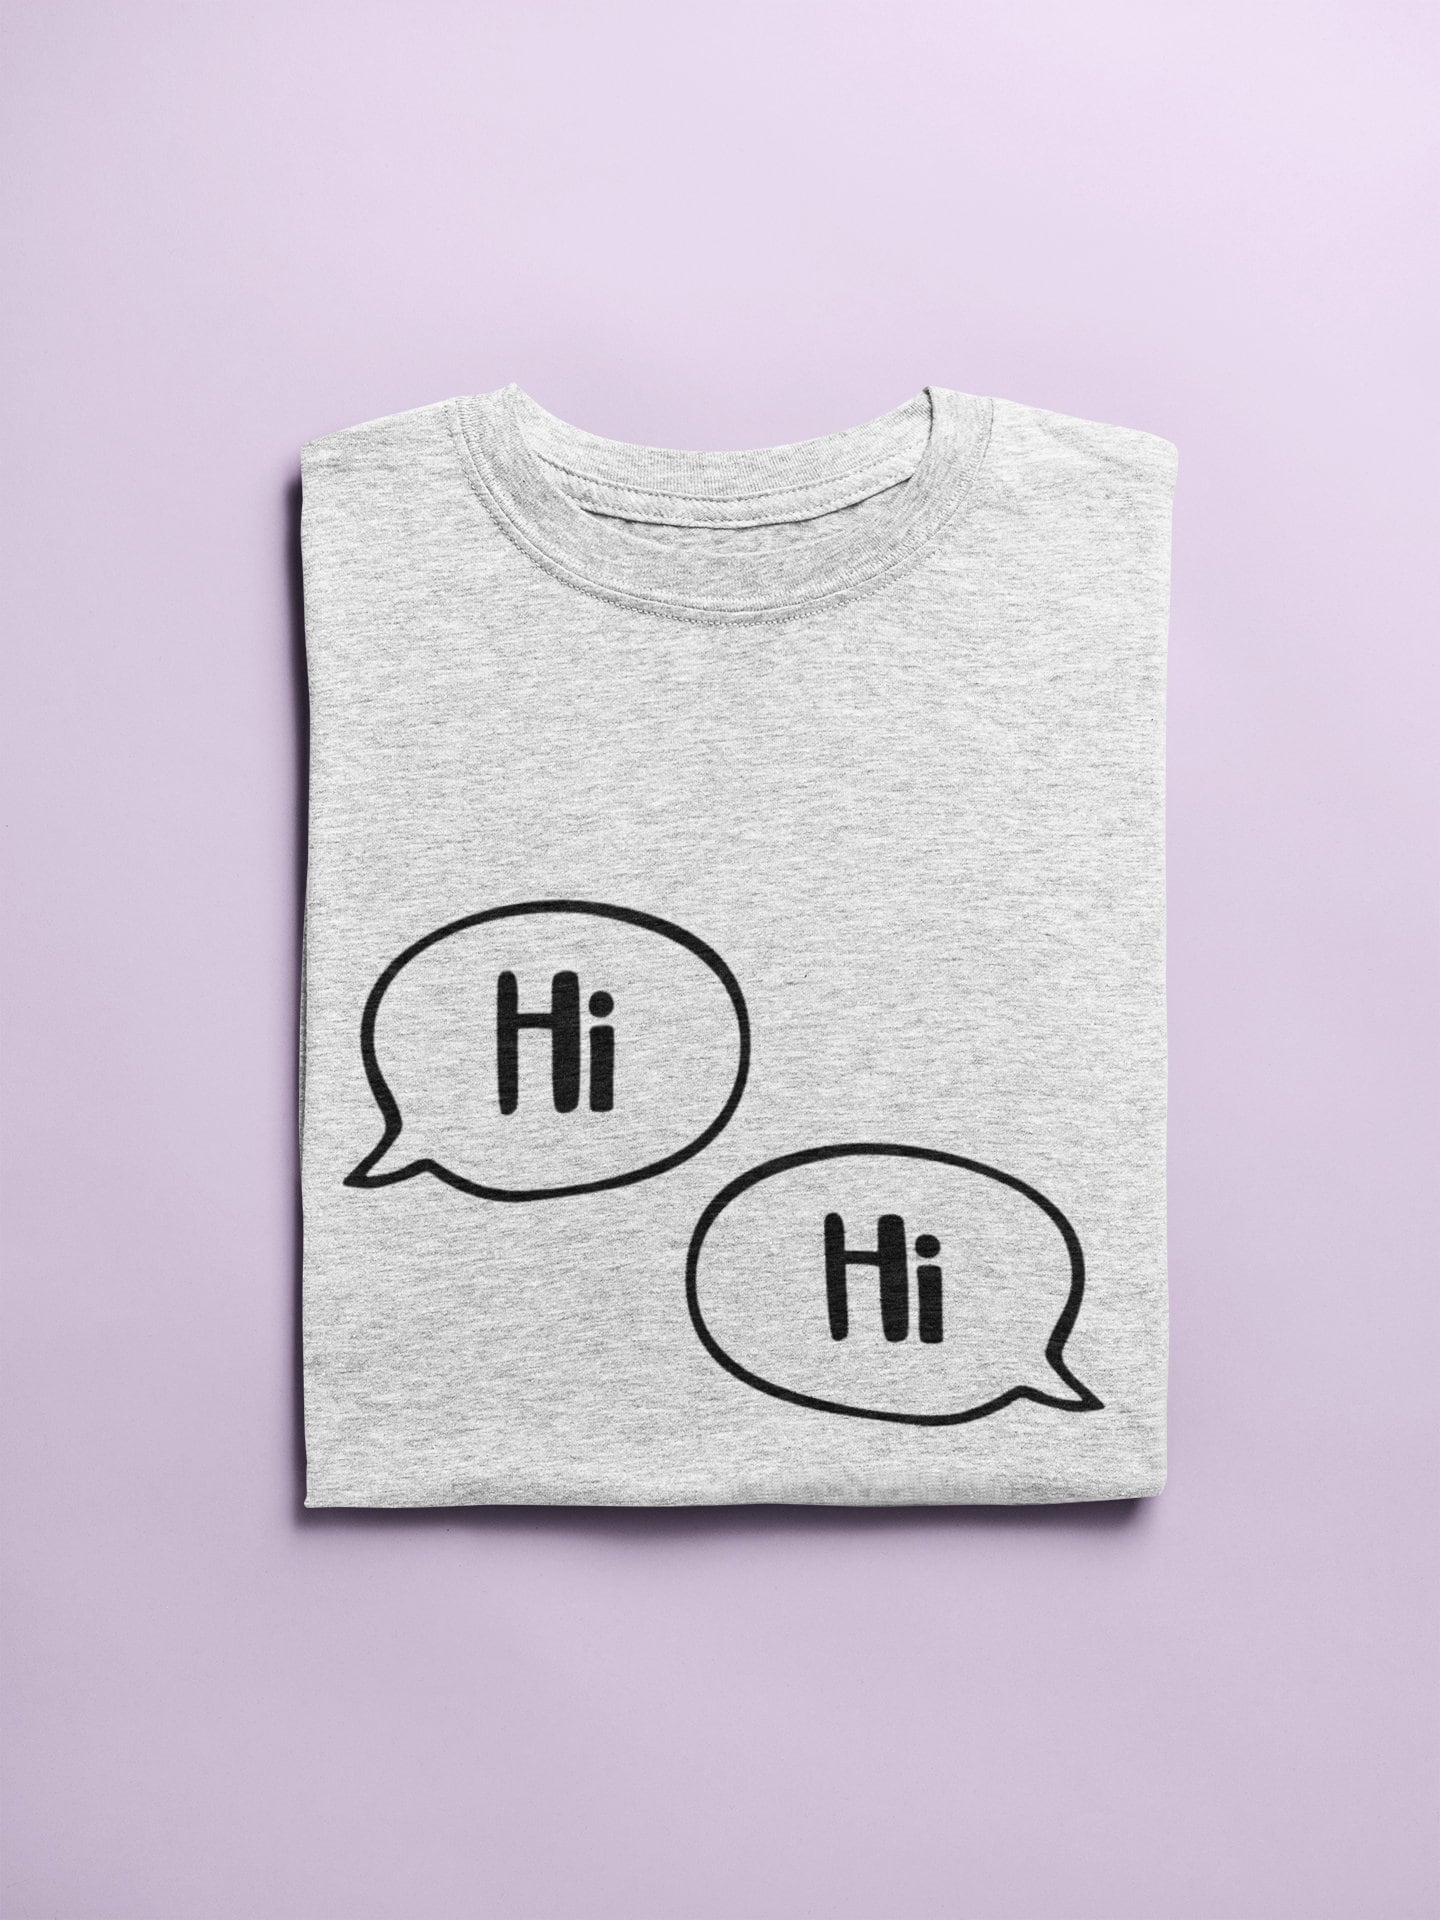 Hi, Hi Inspired Heartstopper Tshirt | Gay Pride - Heartstopper Gift - LGBTQ+